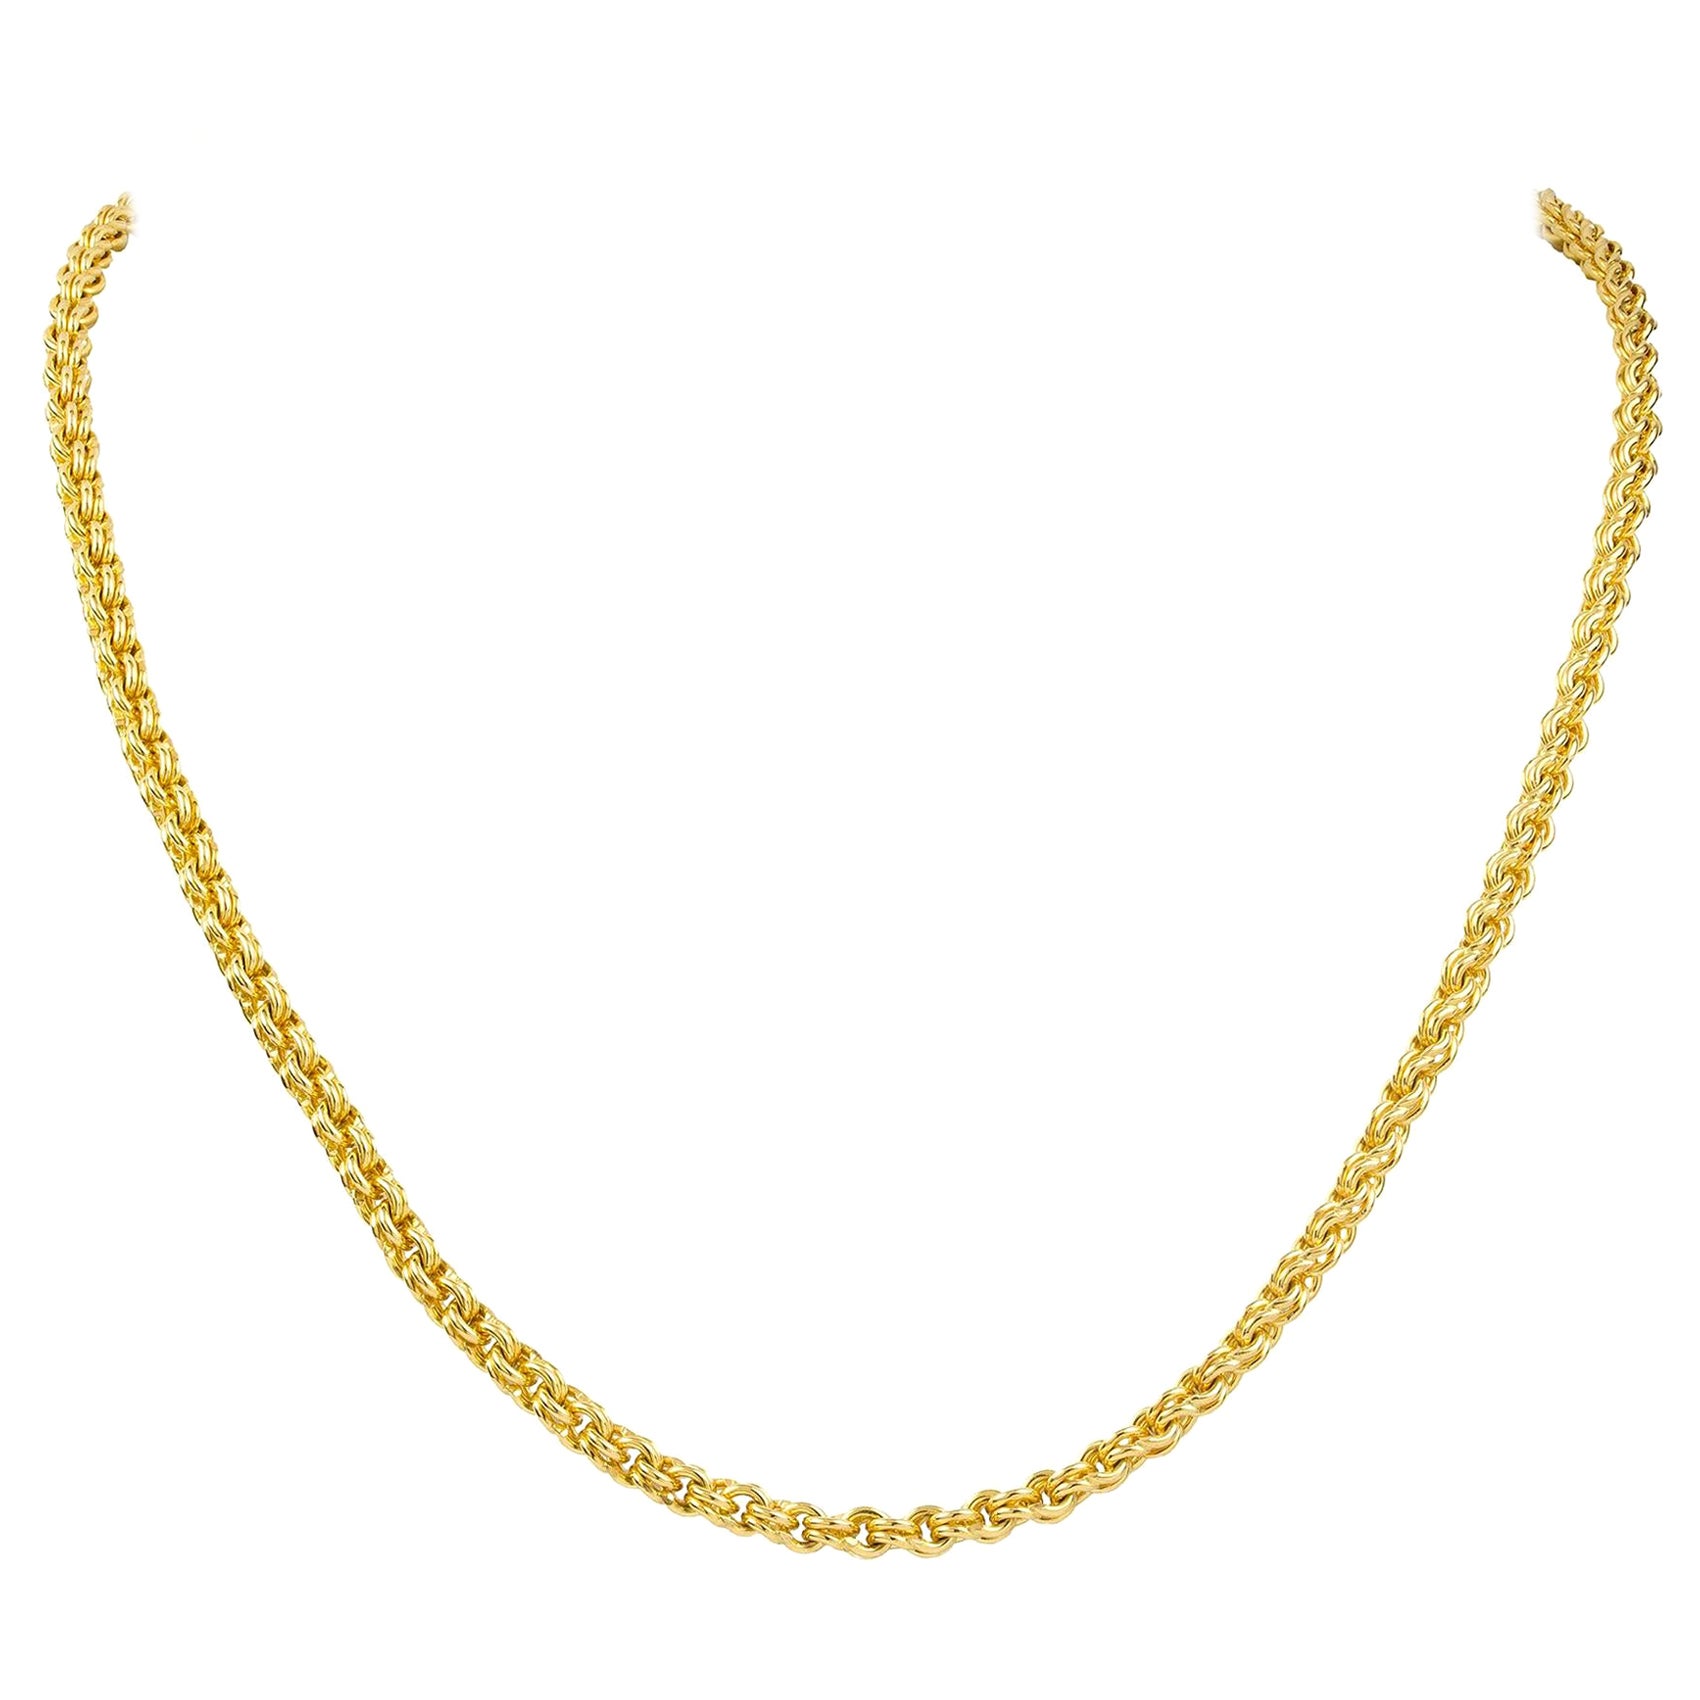 Handmade Minstrel Gold Necklace by Lucie Heskett-Brem